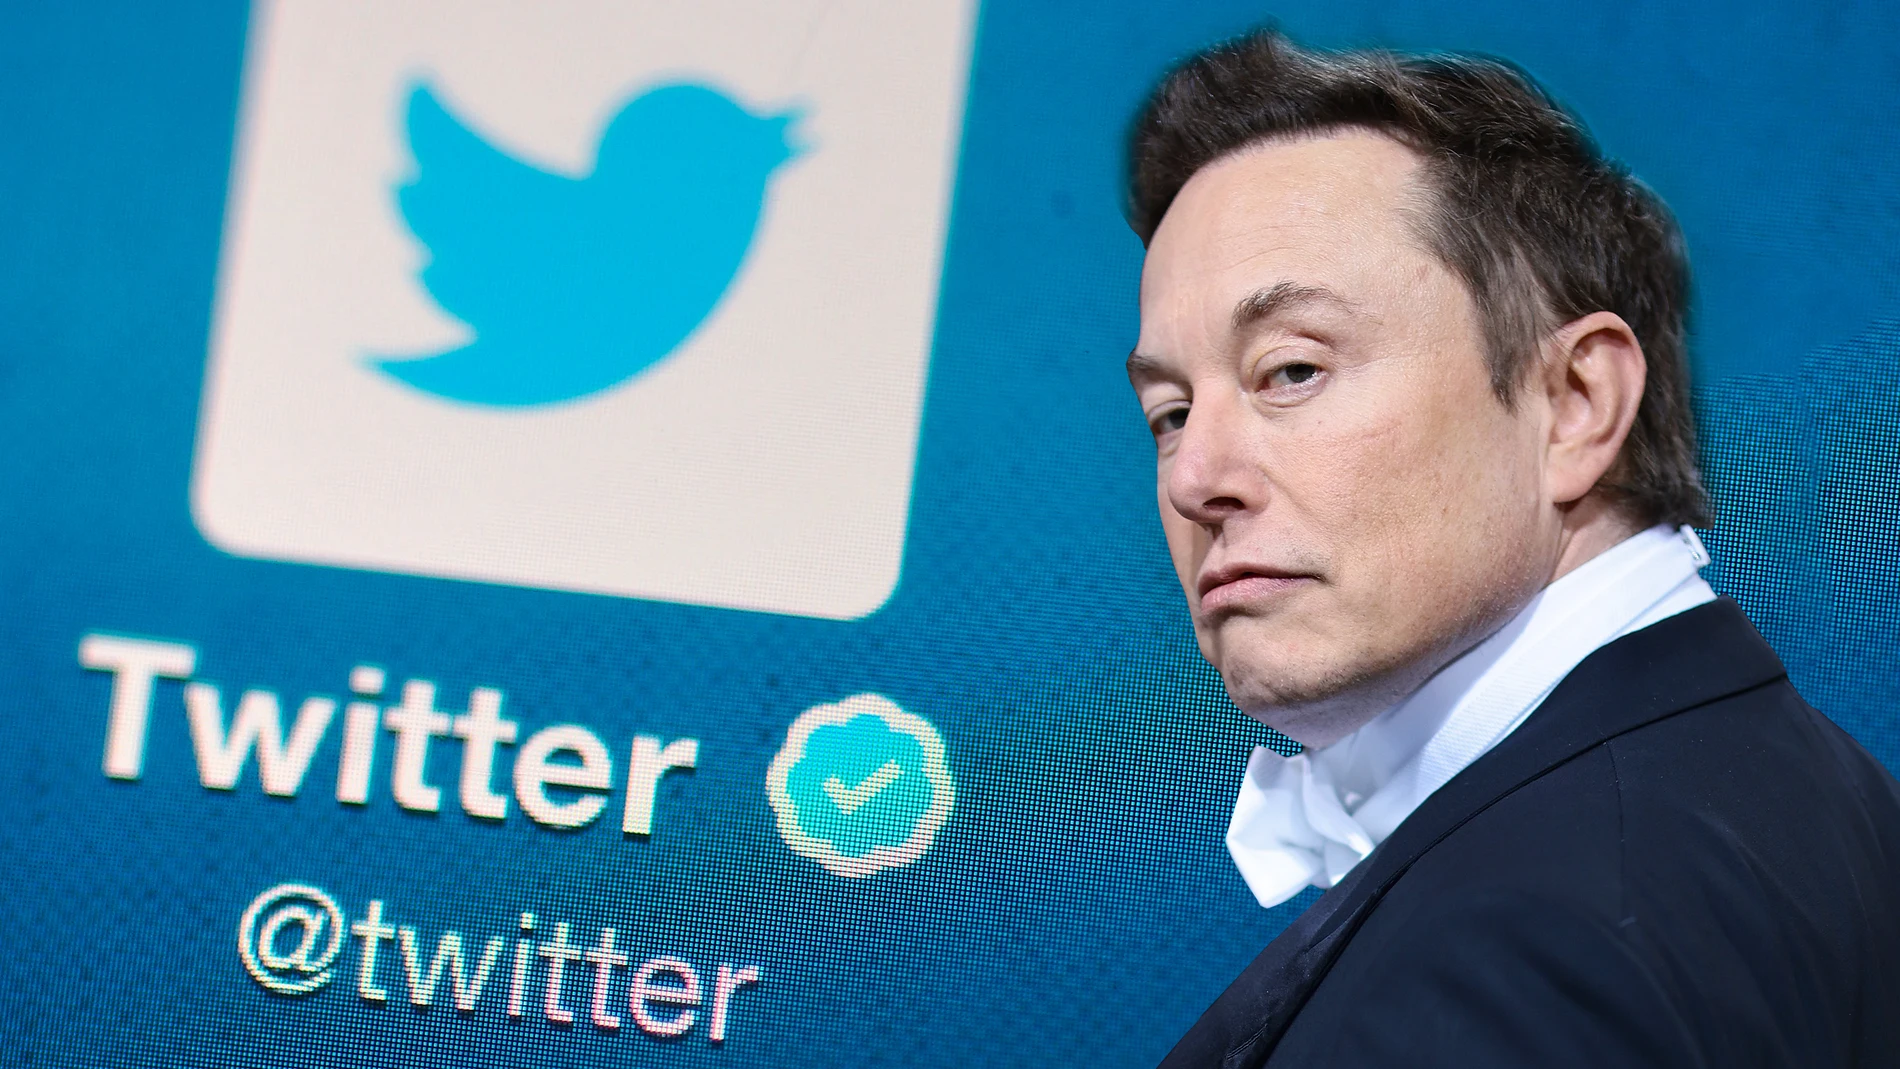 Elon Musk Twitter sufre caída significativa en ingresos publicitarios